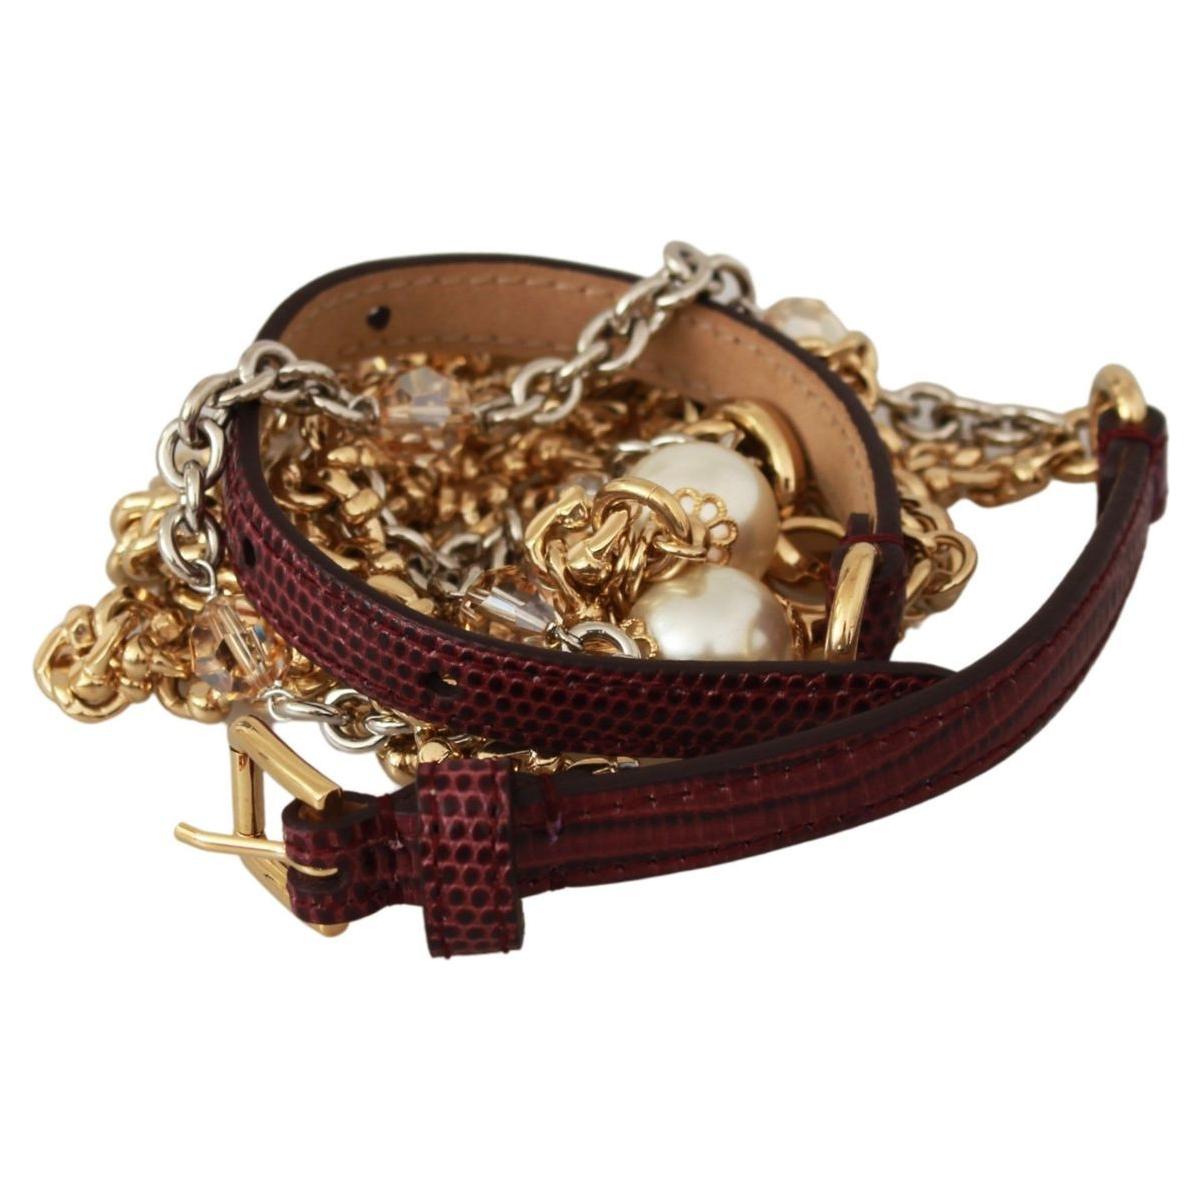 Dolce & Gabbana Crystal Studded Waist Belt in Purple purple-leather-gold-chain-crystal-waist-belt Belt IMG_1605-c194958b-e23.jpg